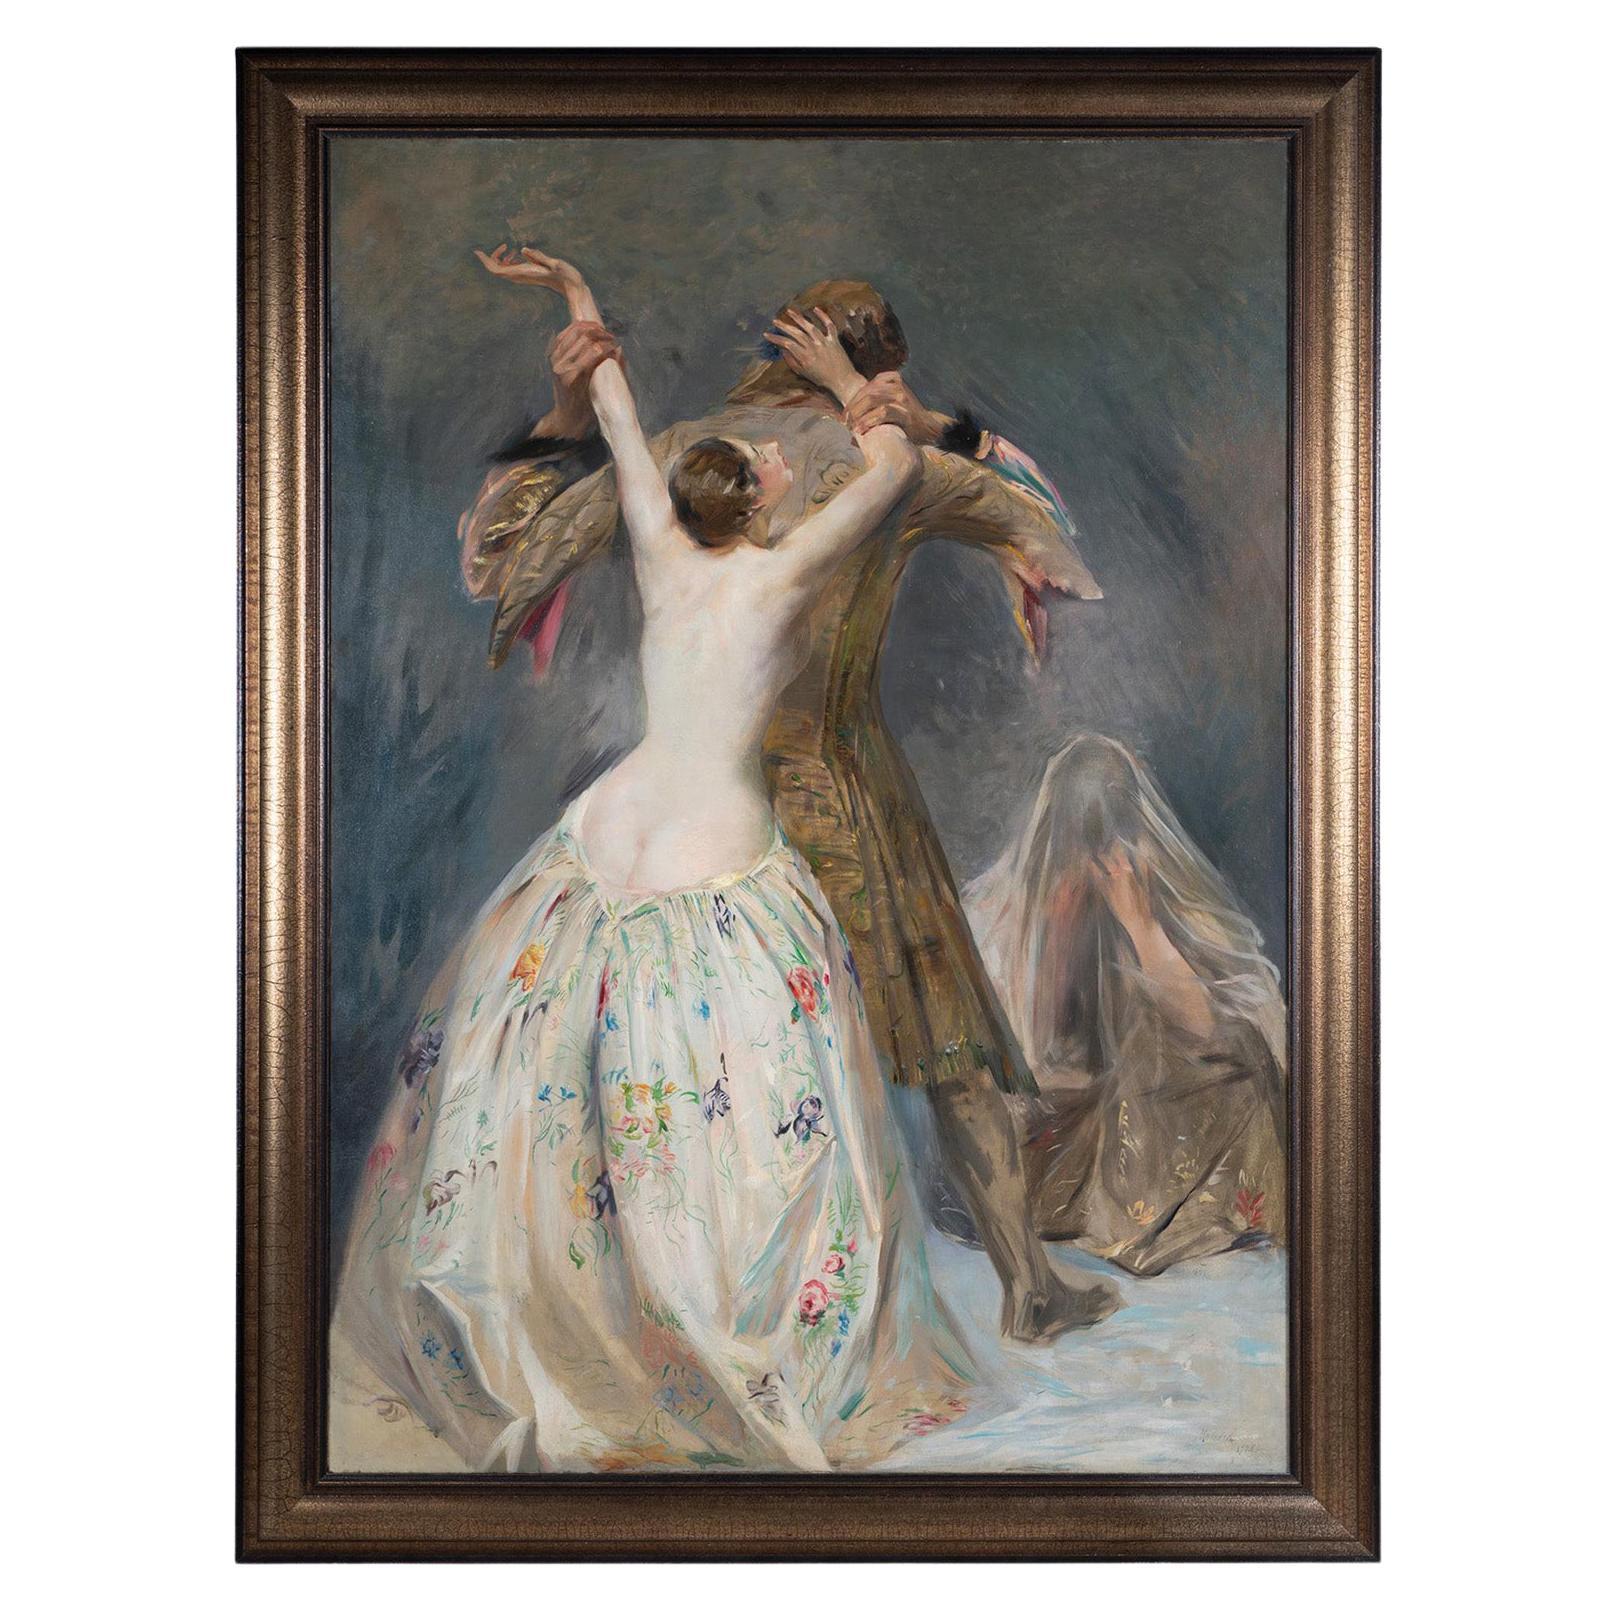 Hamilton Hamilton Oil on Canvas "Othello and Desdemona" For Sale